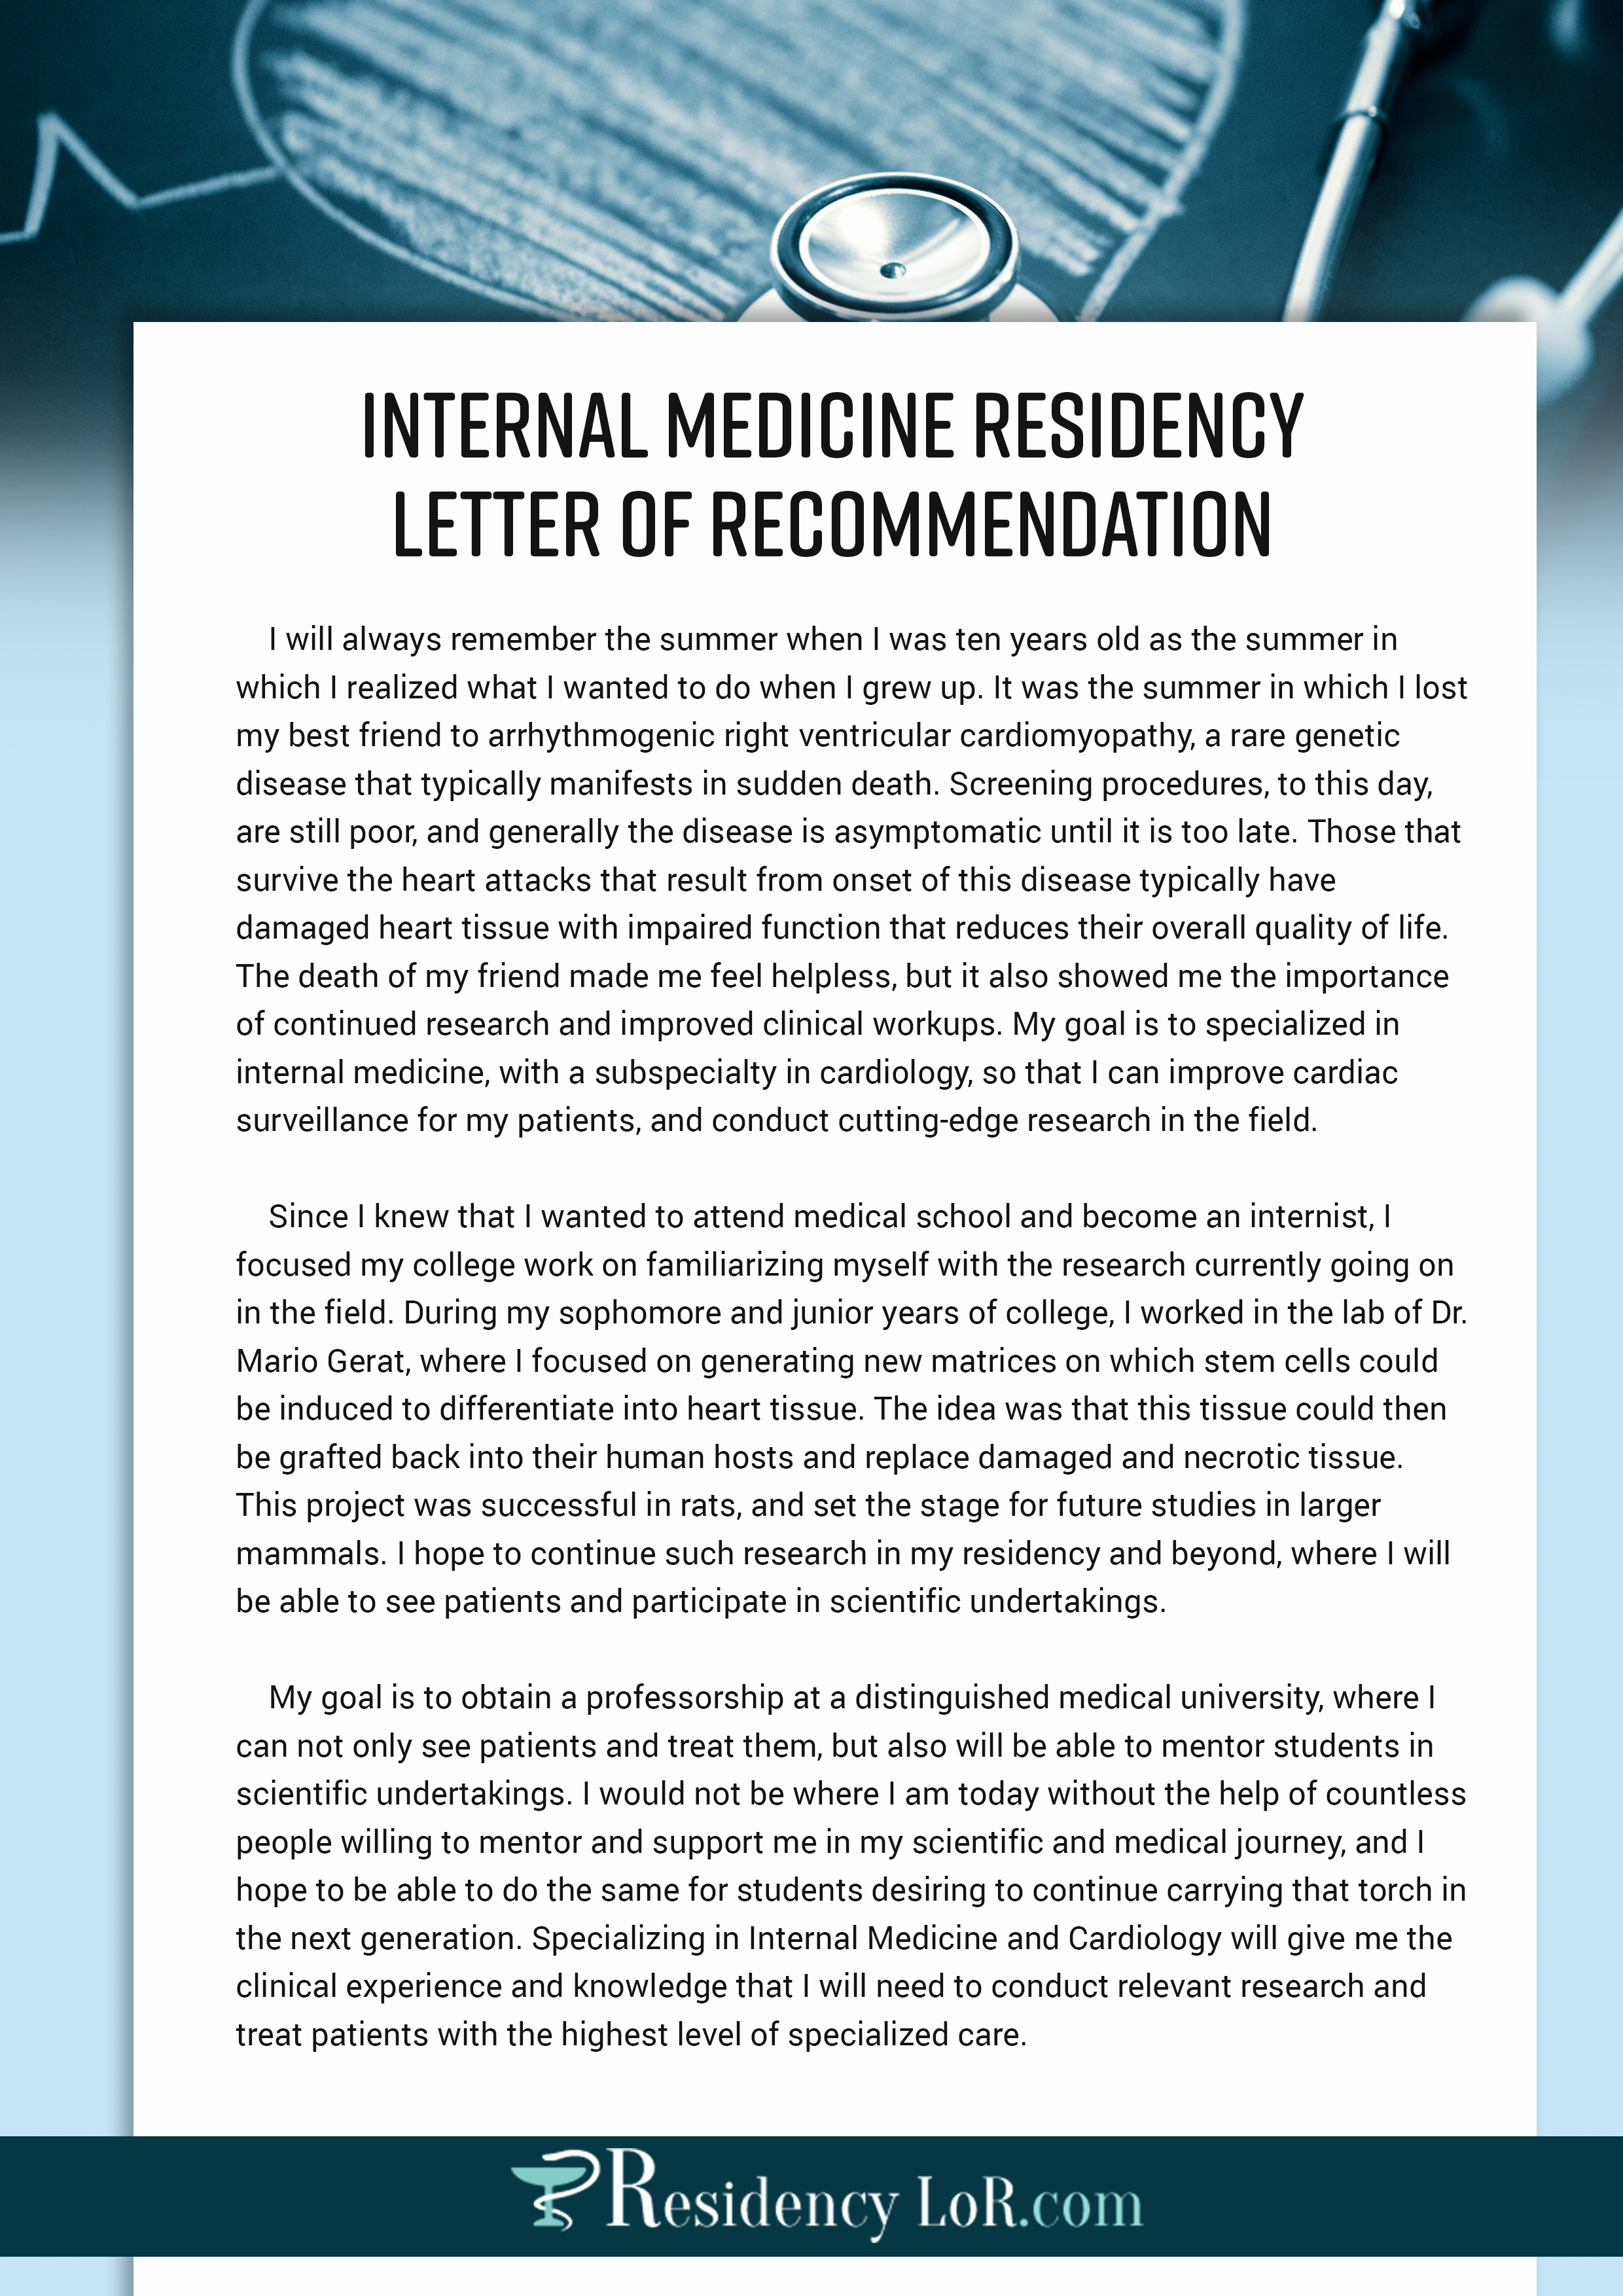 Letter Of Recommendation Residency Fresh Sample Letter Of Re Mendation for Internal Medicine